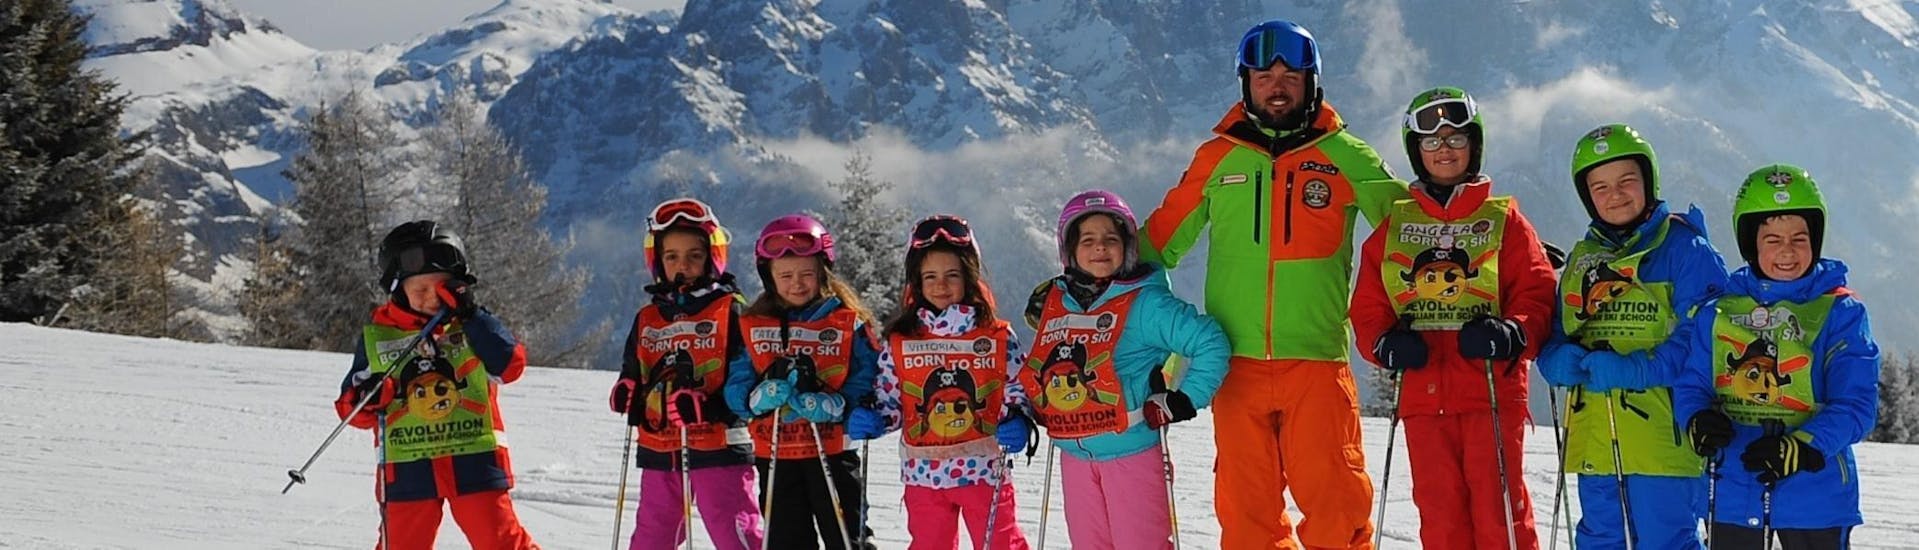 Kids Ski Lesson "Half Day" (4-13 years) - Christmas at  Scuola di Sci AEvolution Folgarida Ski School are about to start, children and ski instructor pose for a photo. 